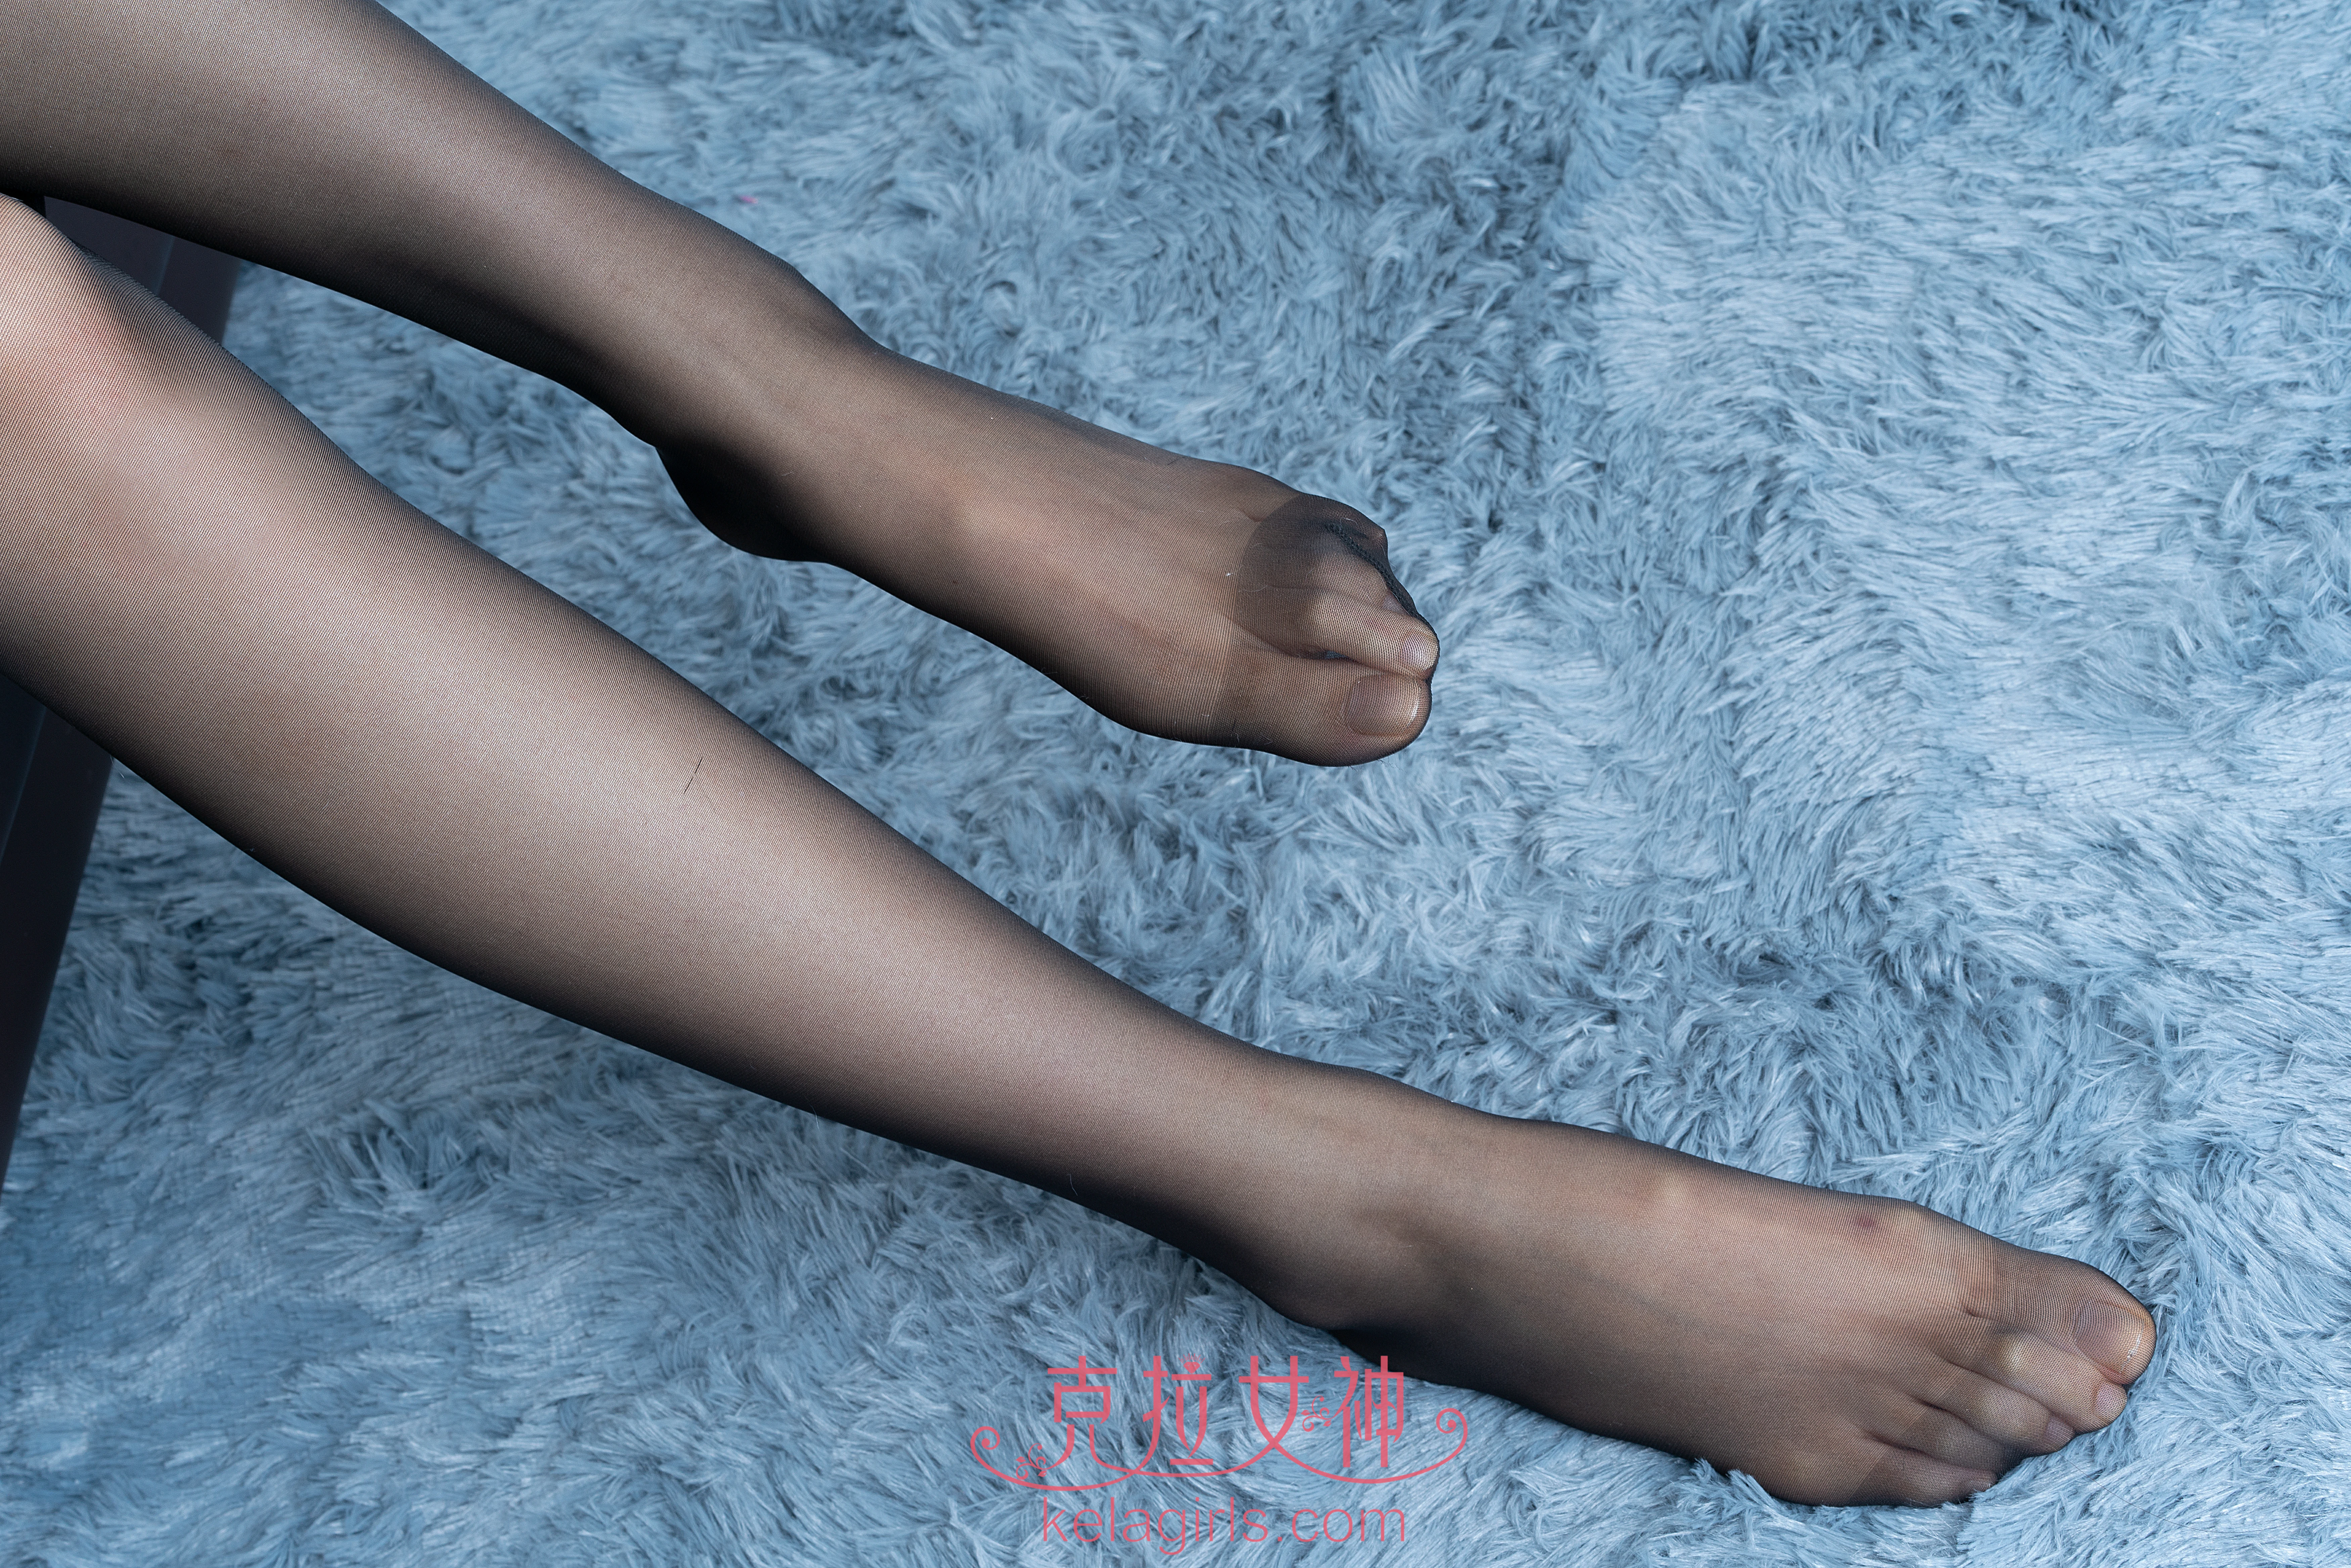 [kelagirls克拉女神]2019-09-22 《长腿秘书》 静宜 吊带塑身衣与黑色短裙加黑色丝袜美腿性感私房写真集,